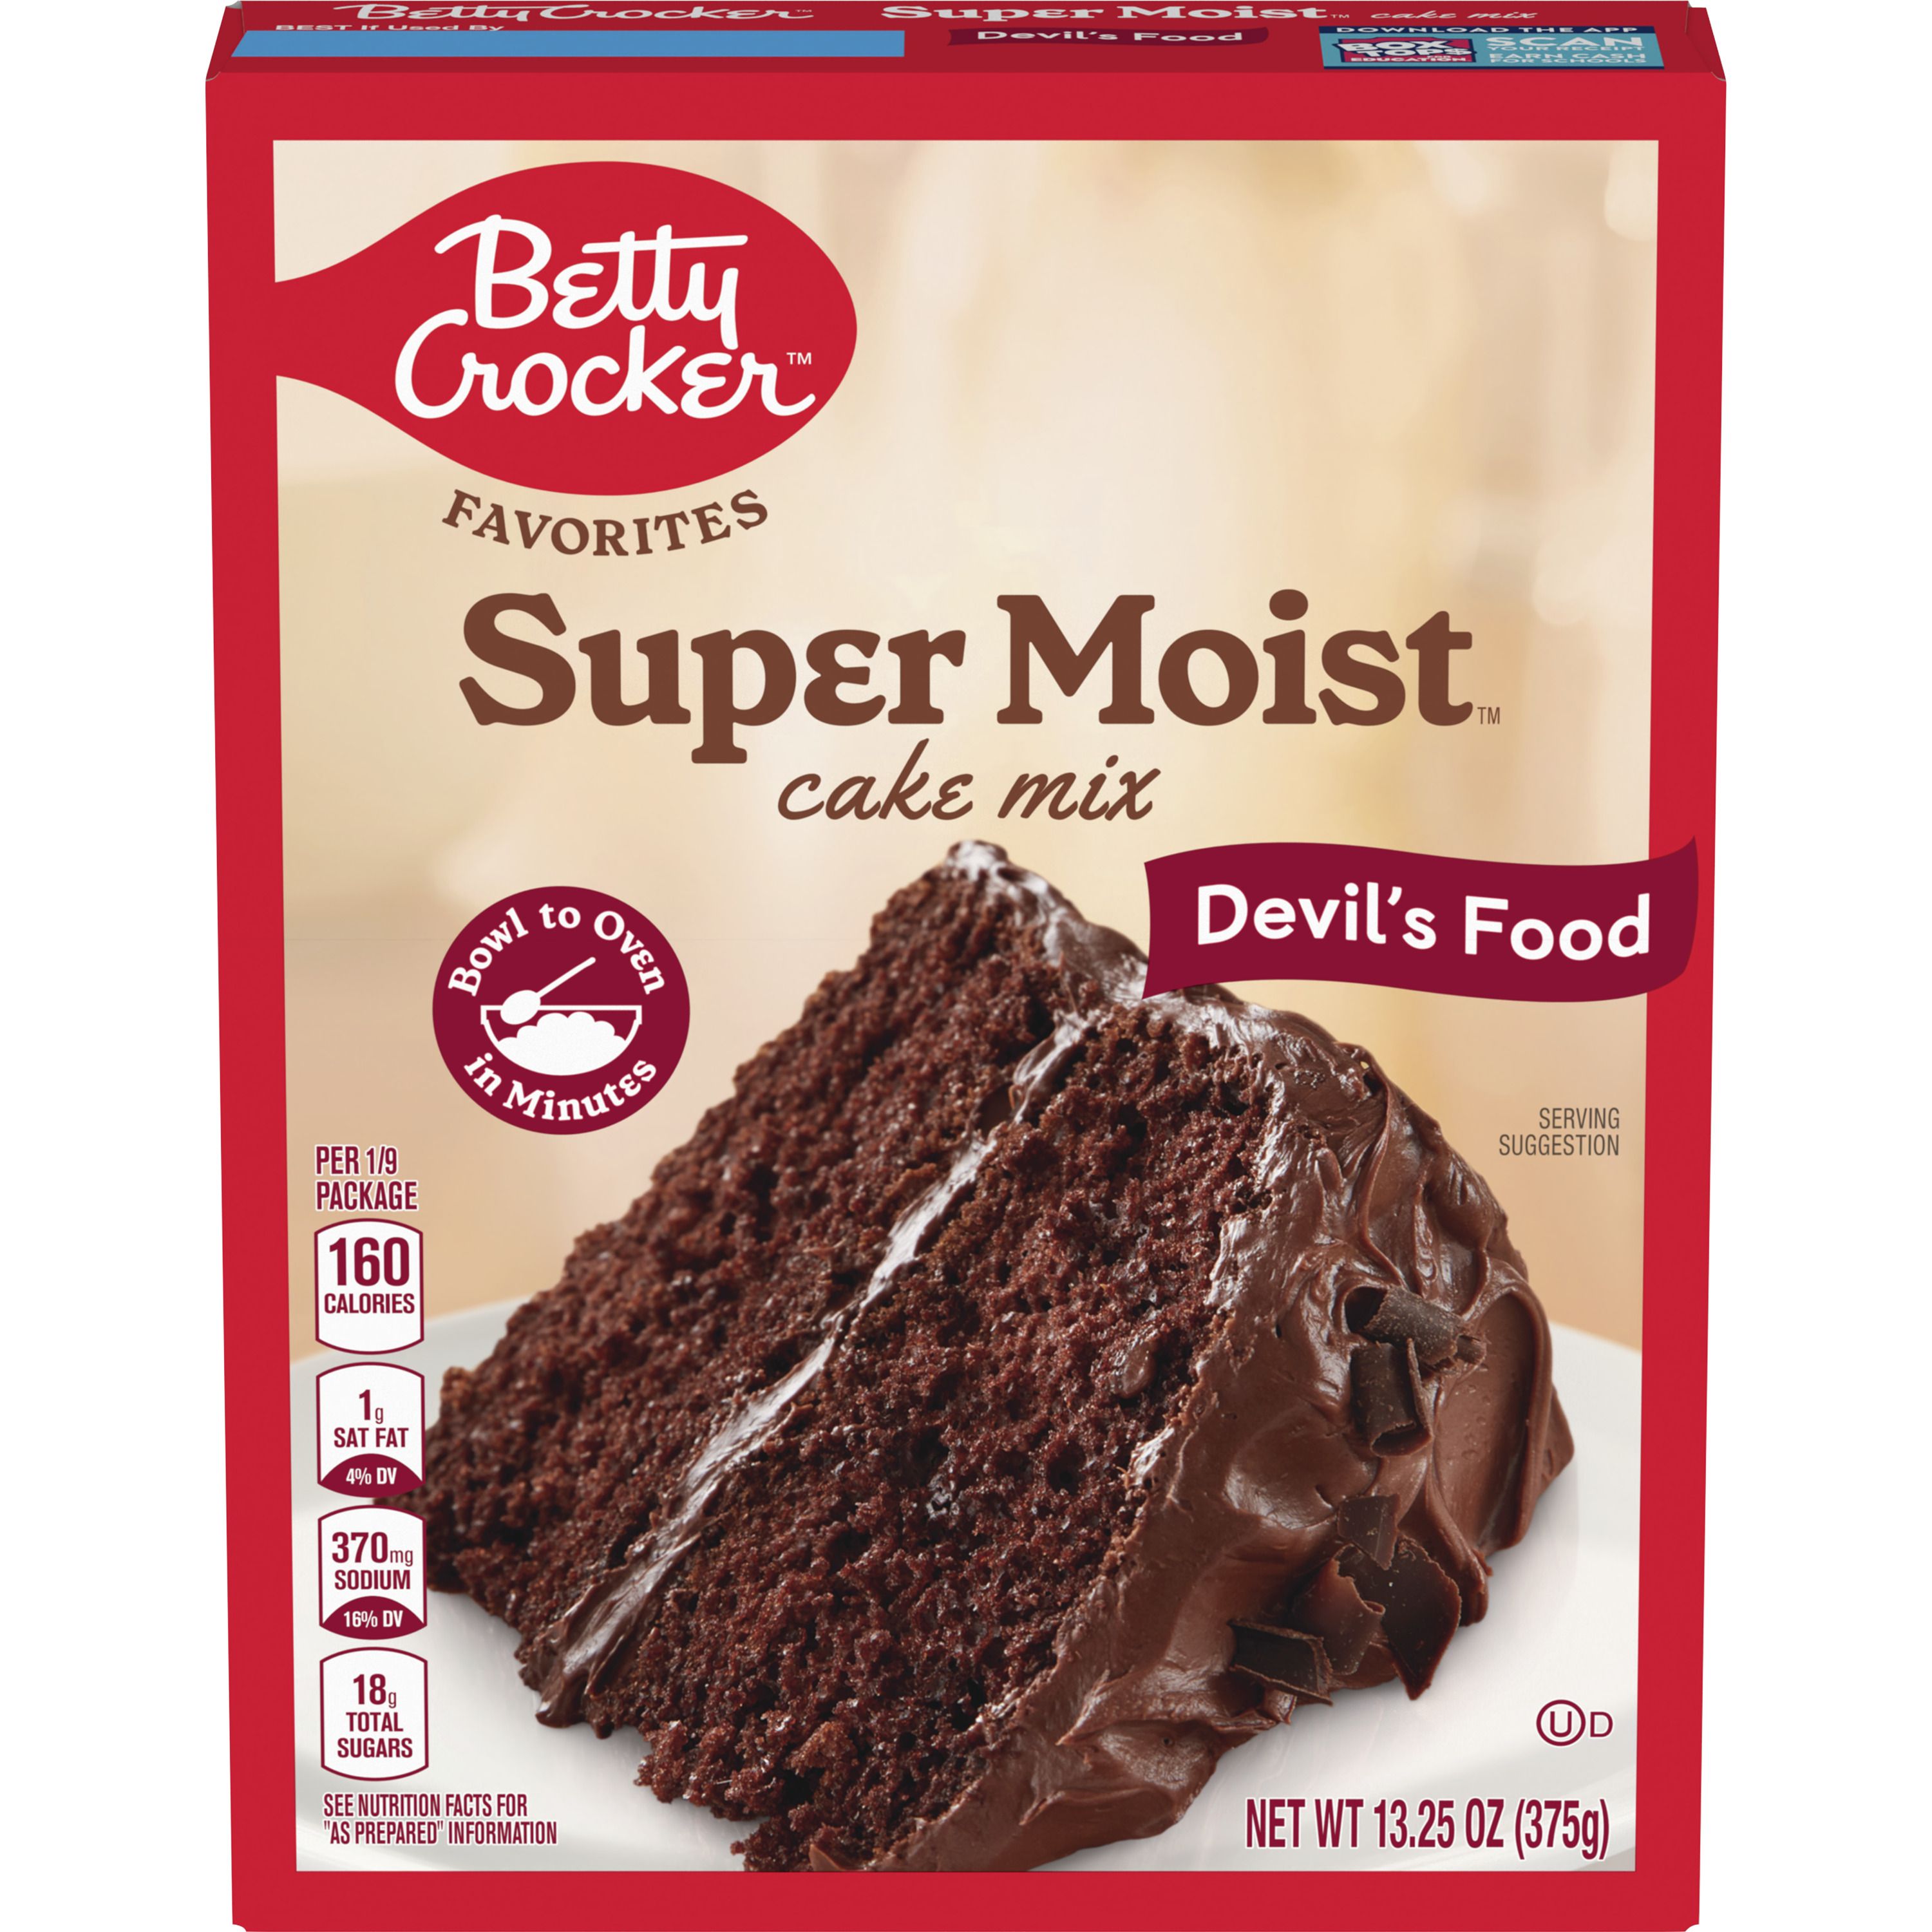 Betty Crocker Favorites Super Moist Devil’s Food Cake Mix, 13.25 oz - Front